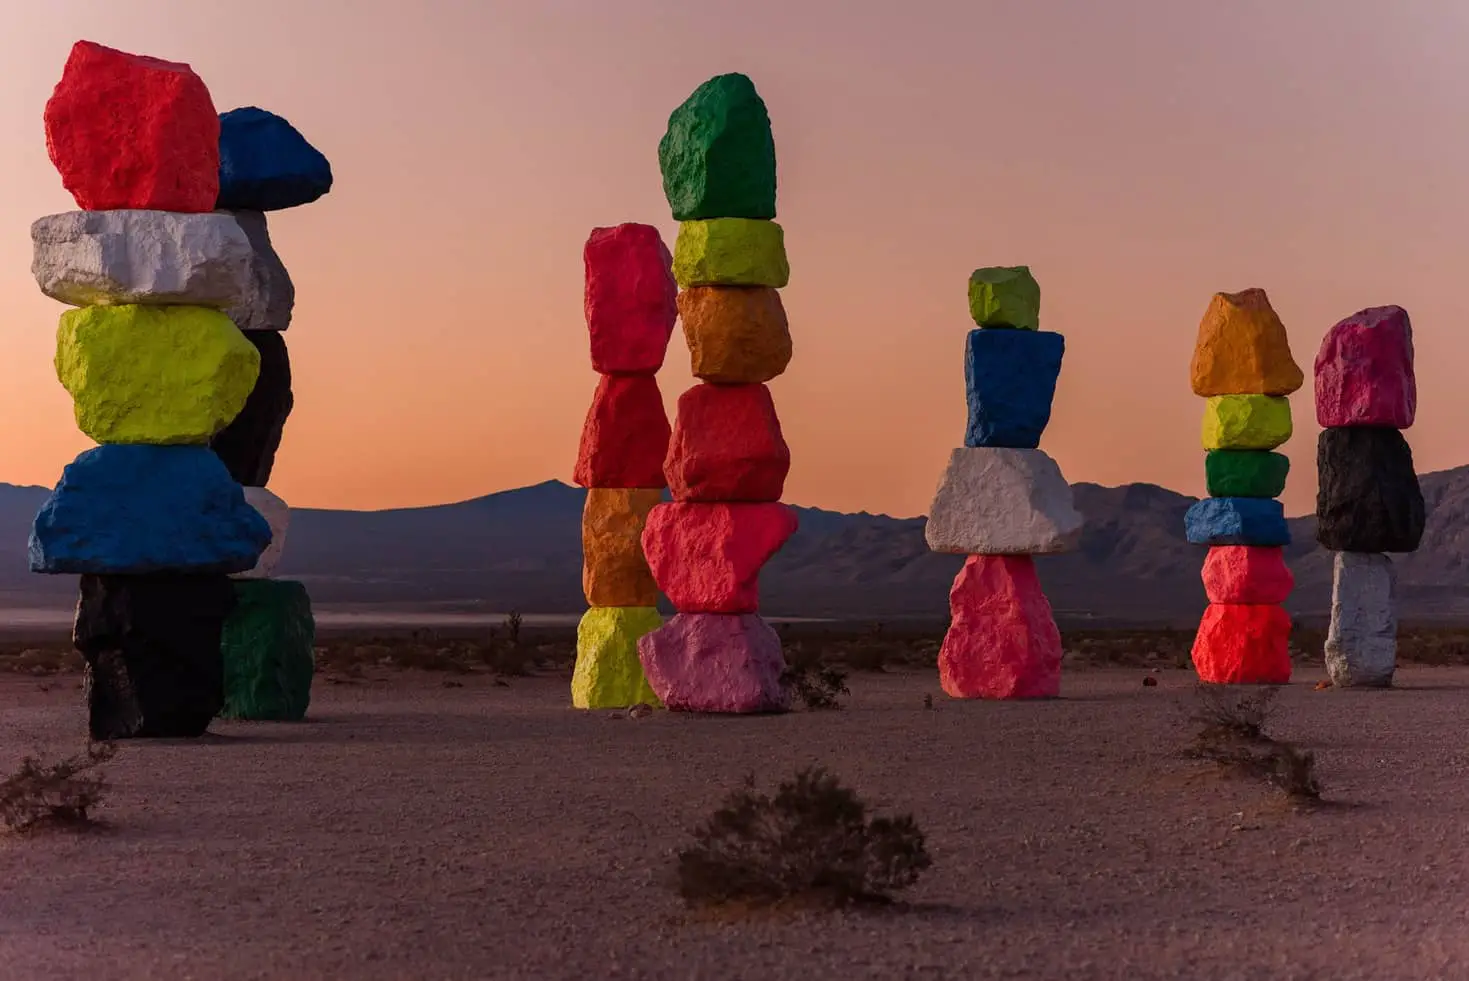 Seven stone sculptures in the desert